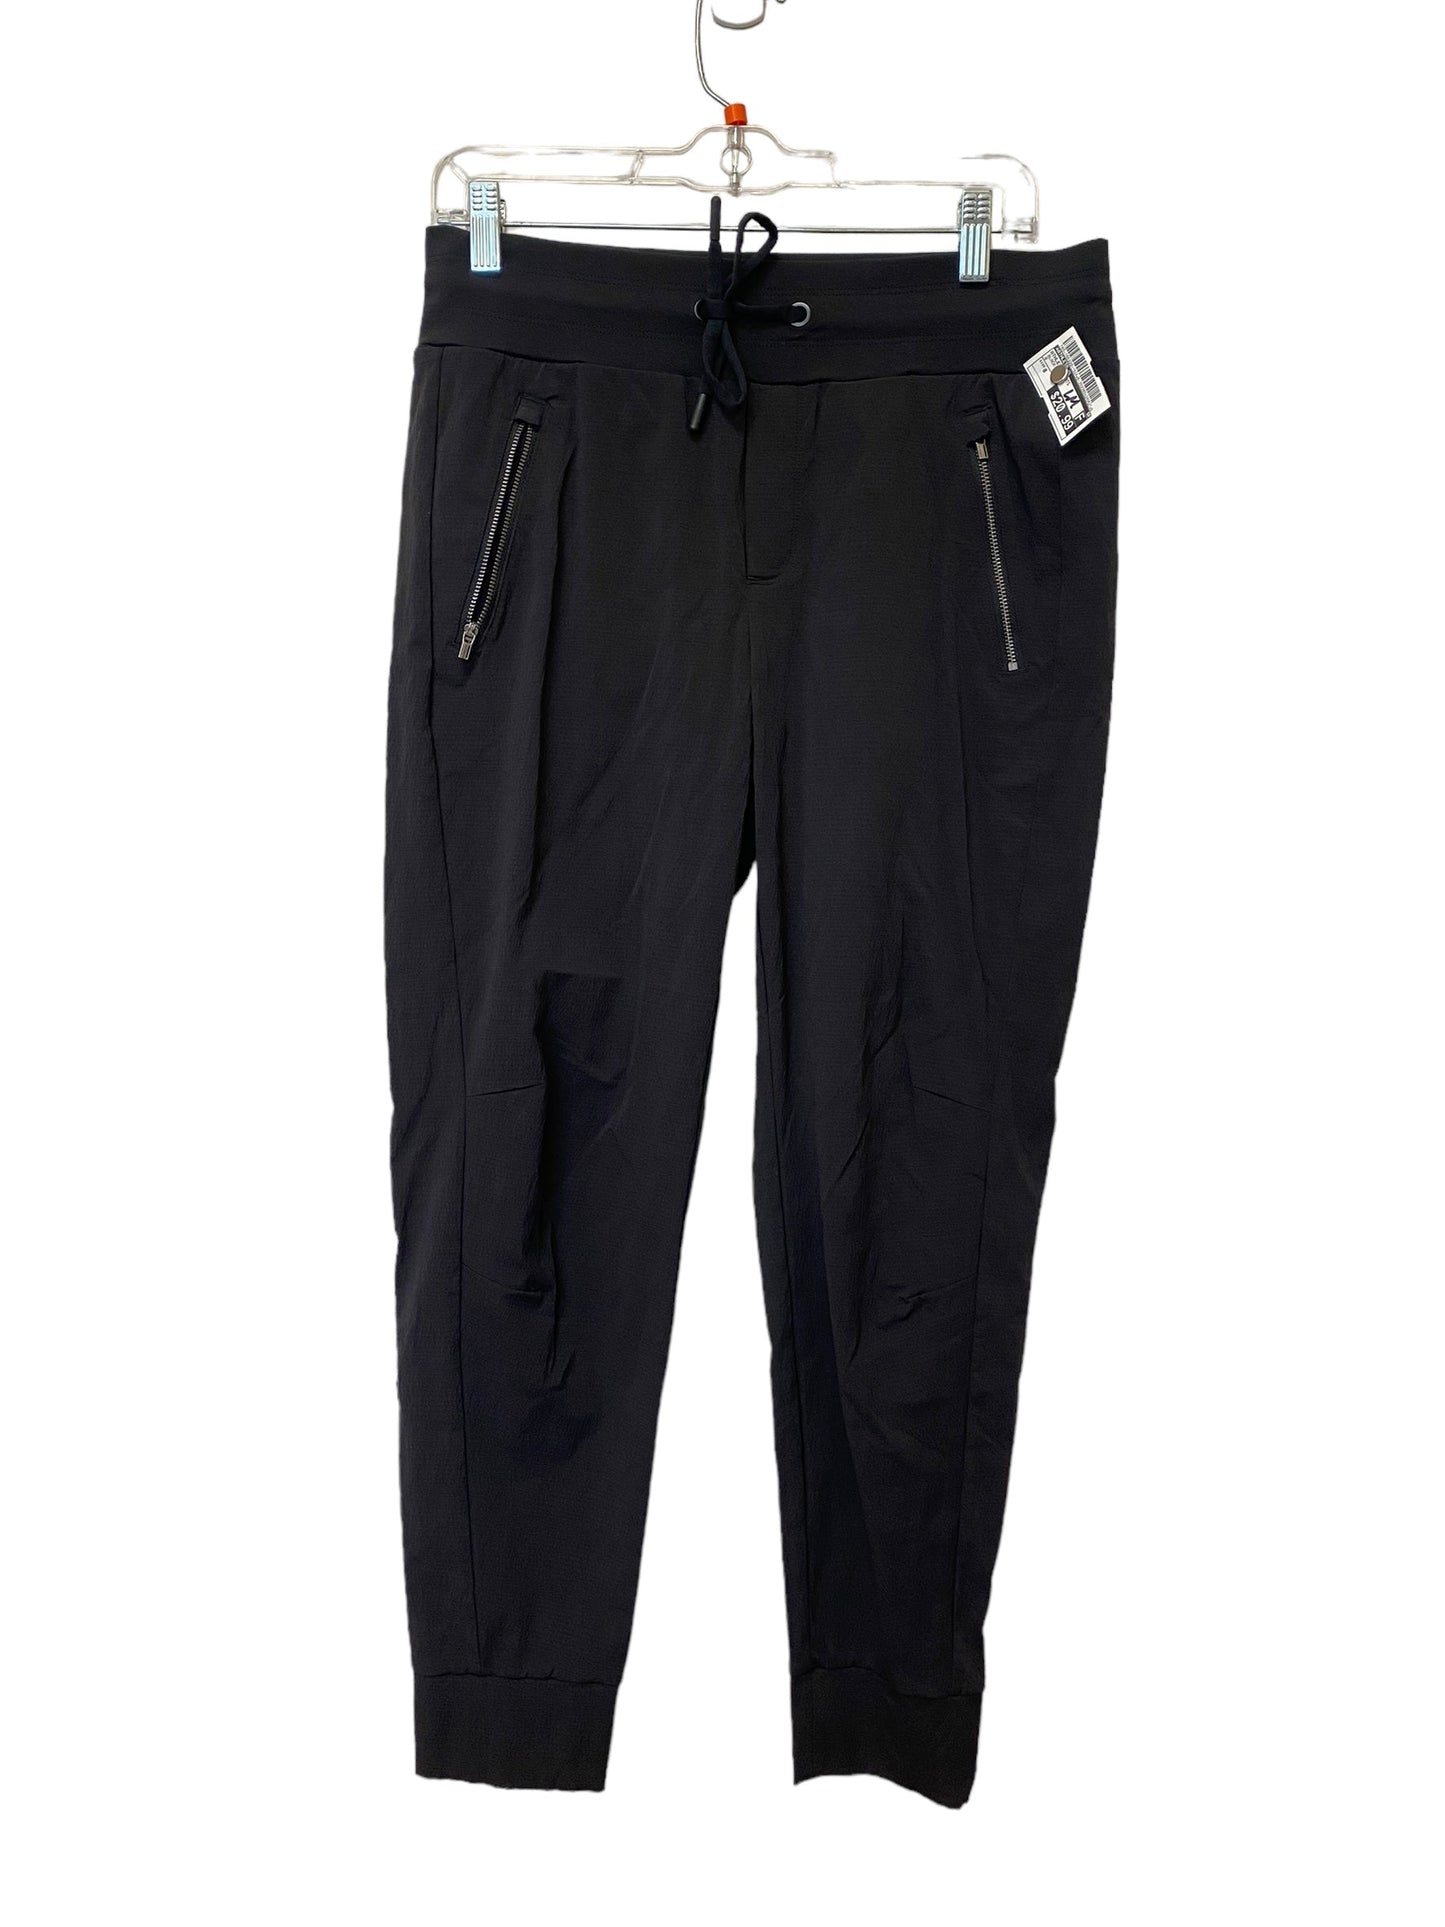 Black Athletic Pants Athleta, Size 8